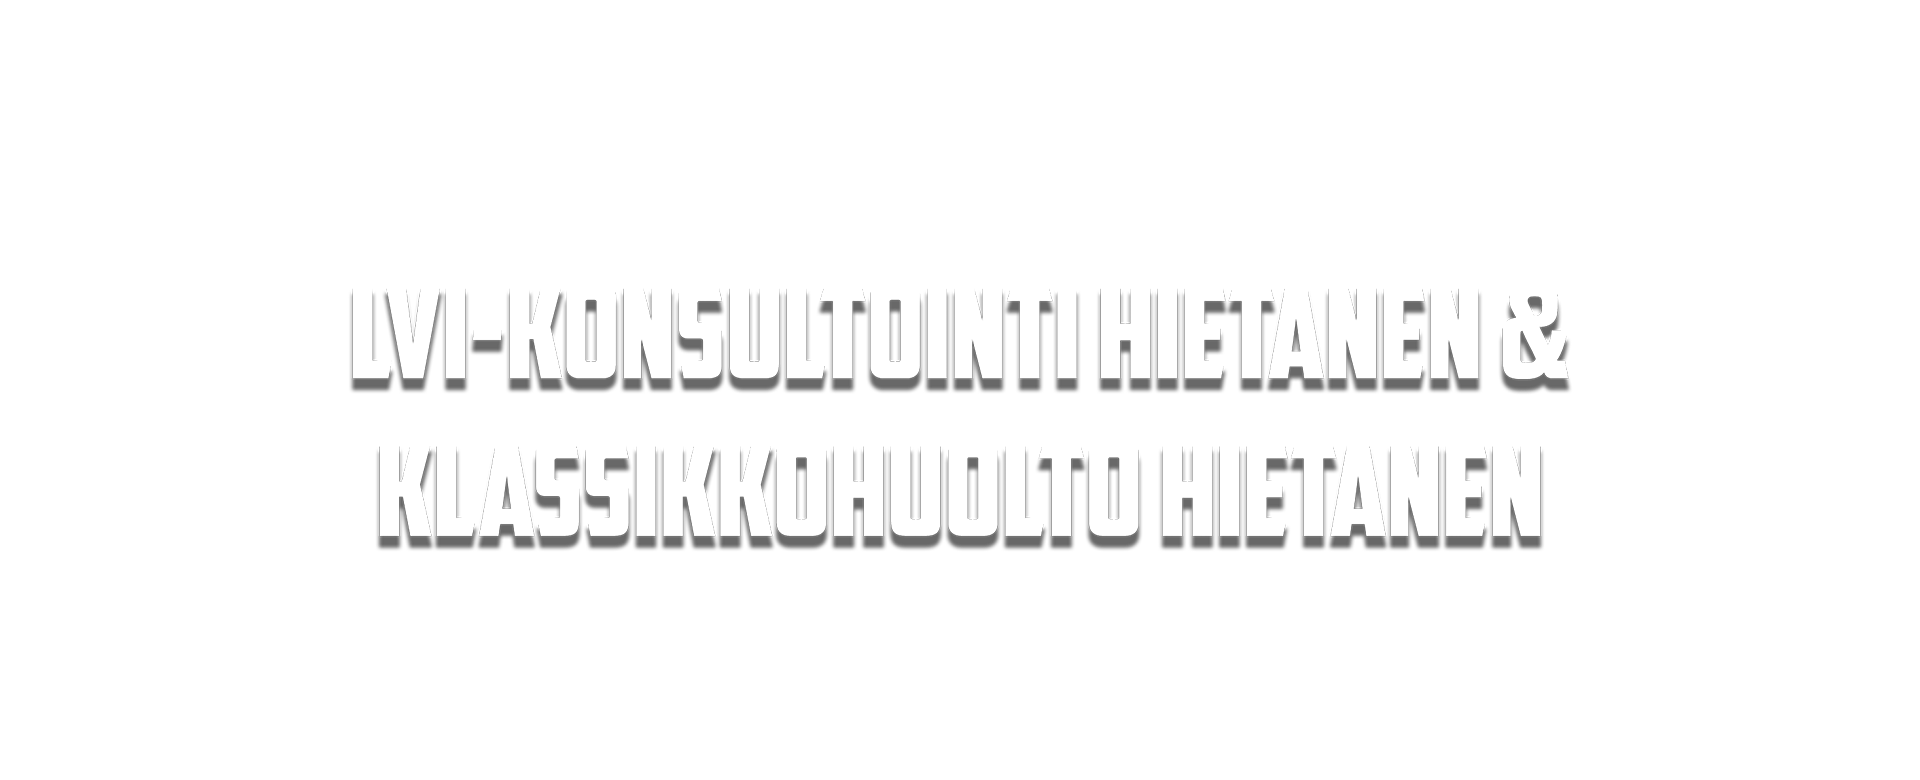 LVI-konsultointi Hietanen ja Klassikkohuolto Hietanen